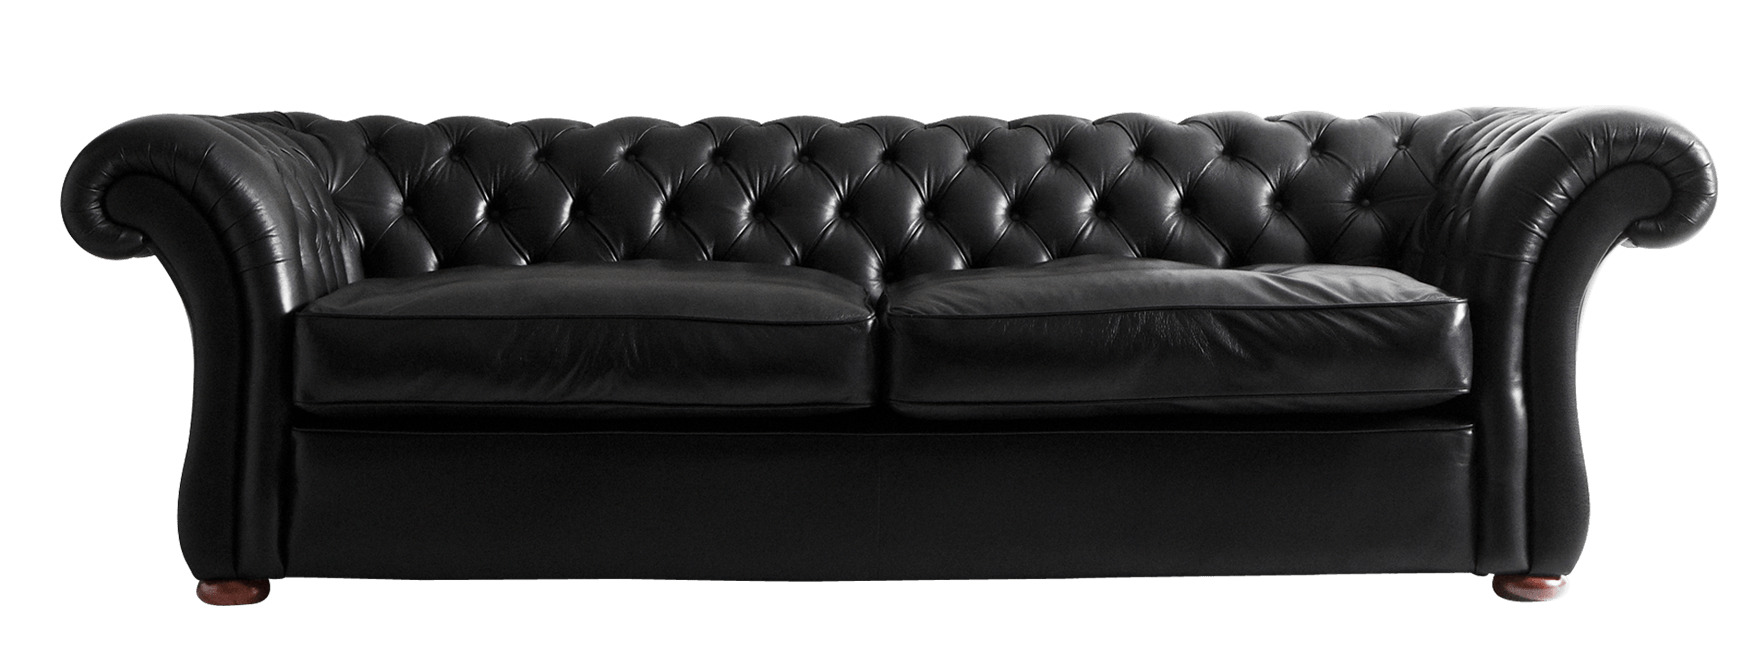 Black Leather Sofa icons